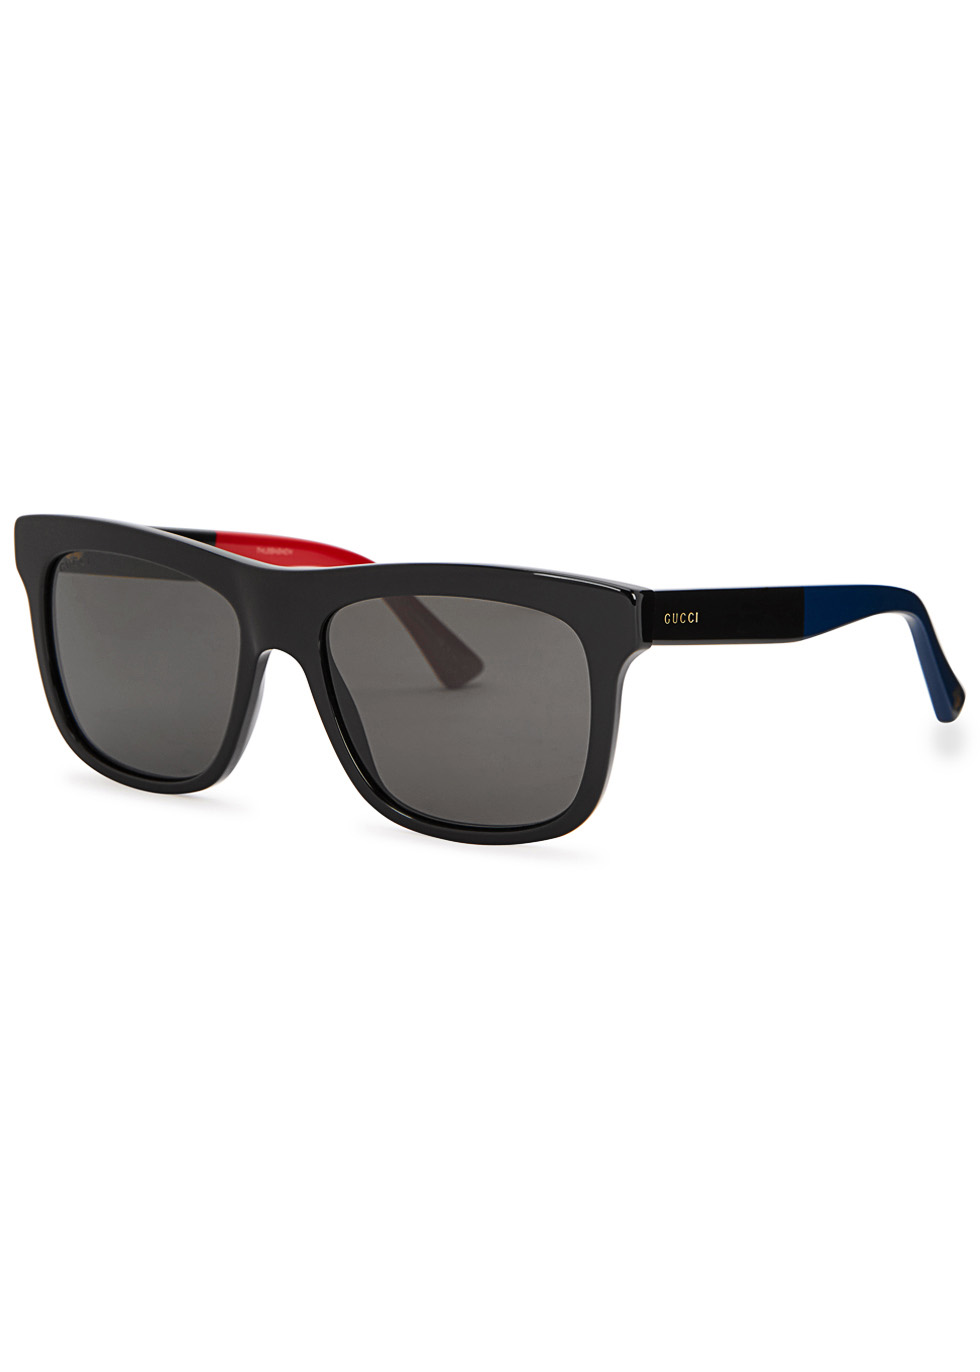 Gucci Black wayfarer-style sunglasses - Harvey Nichols